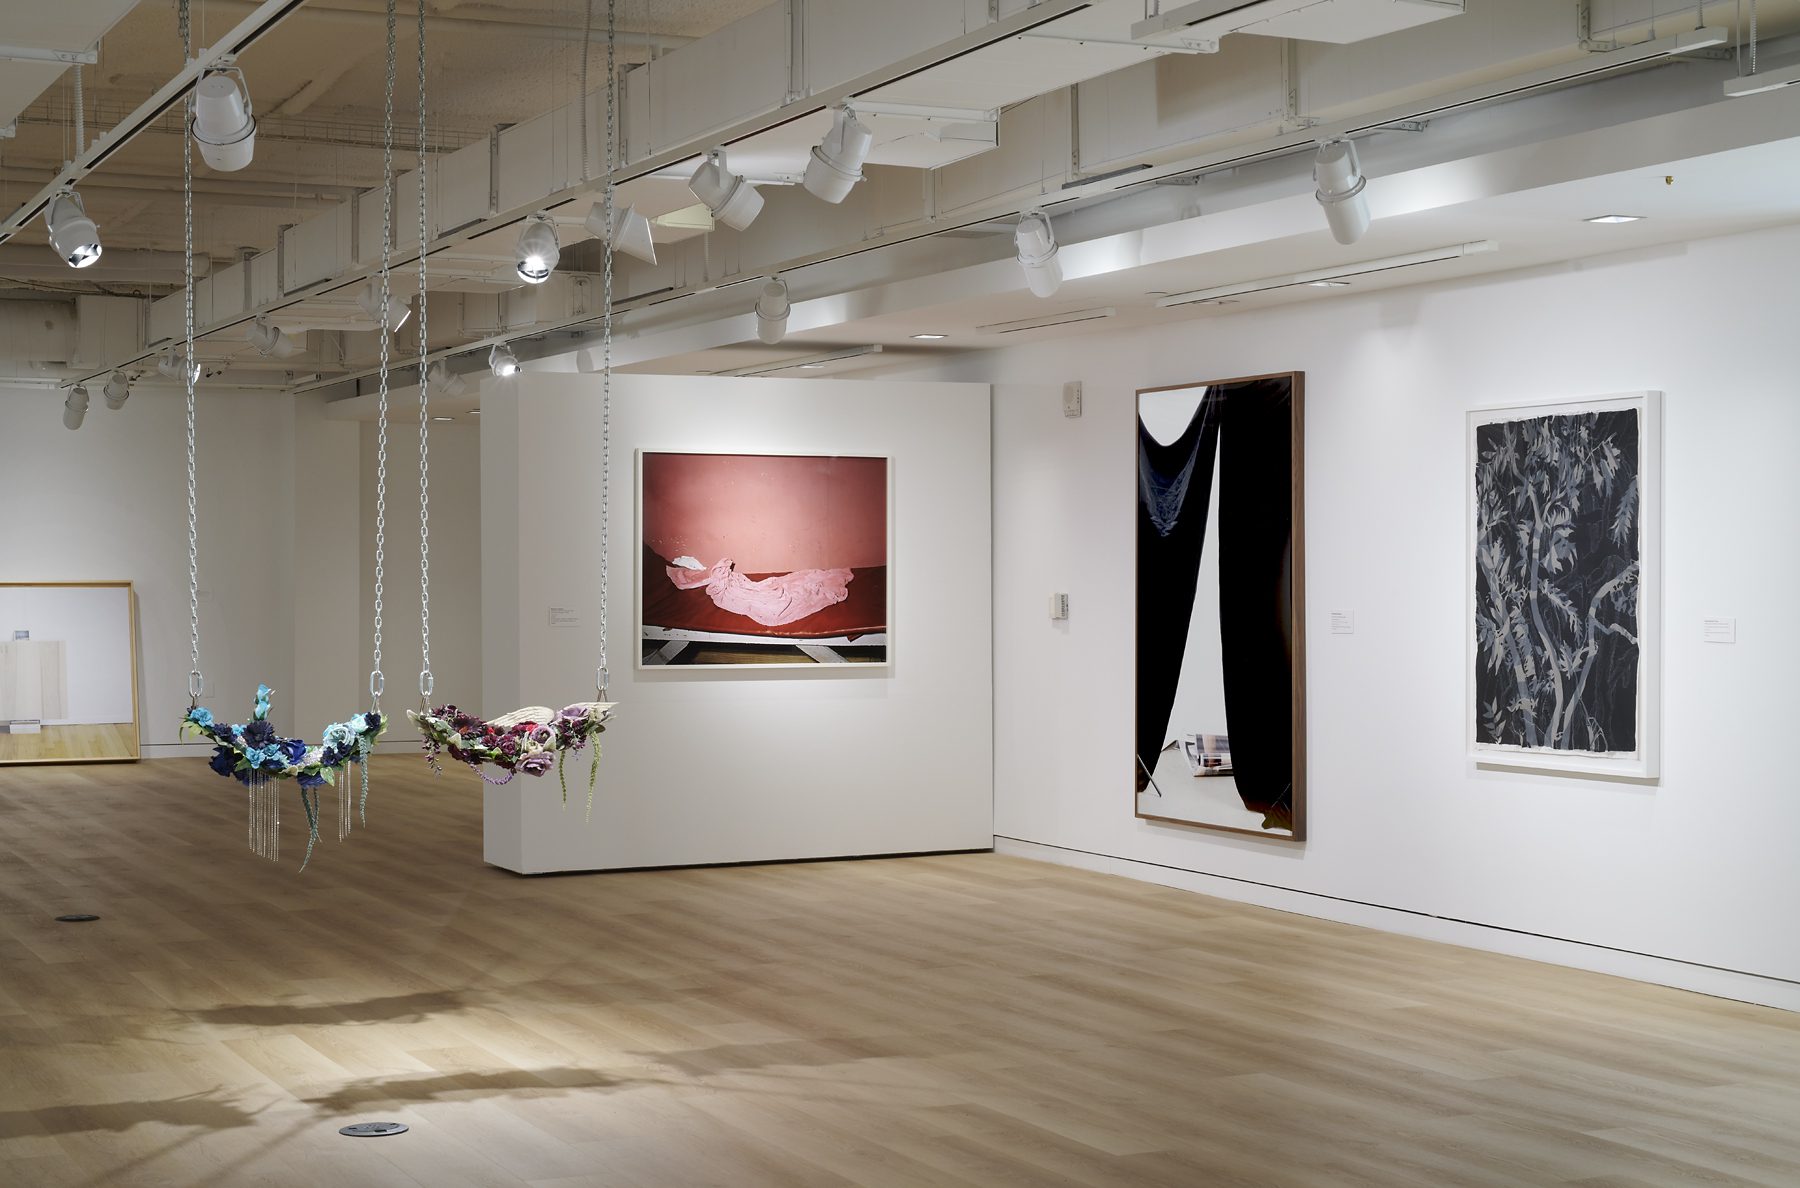 Devan Shimoyama's works in Elegies: Still Lifes in Contemporary Art